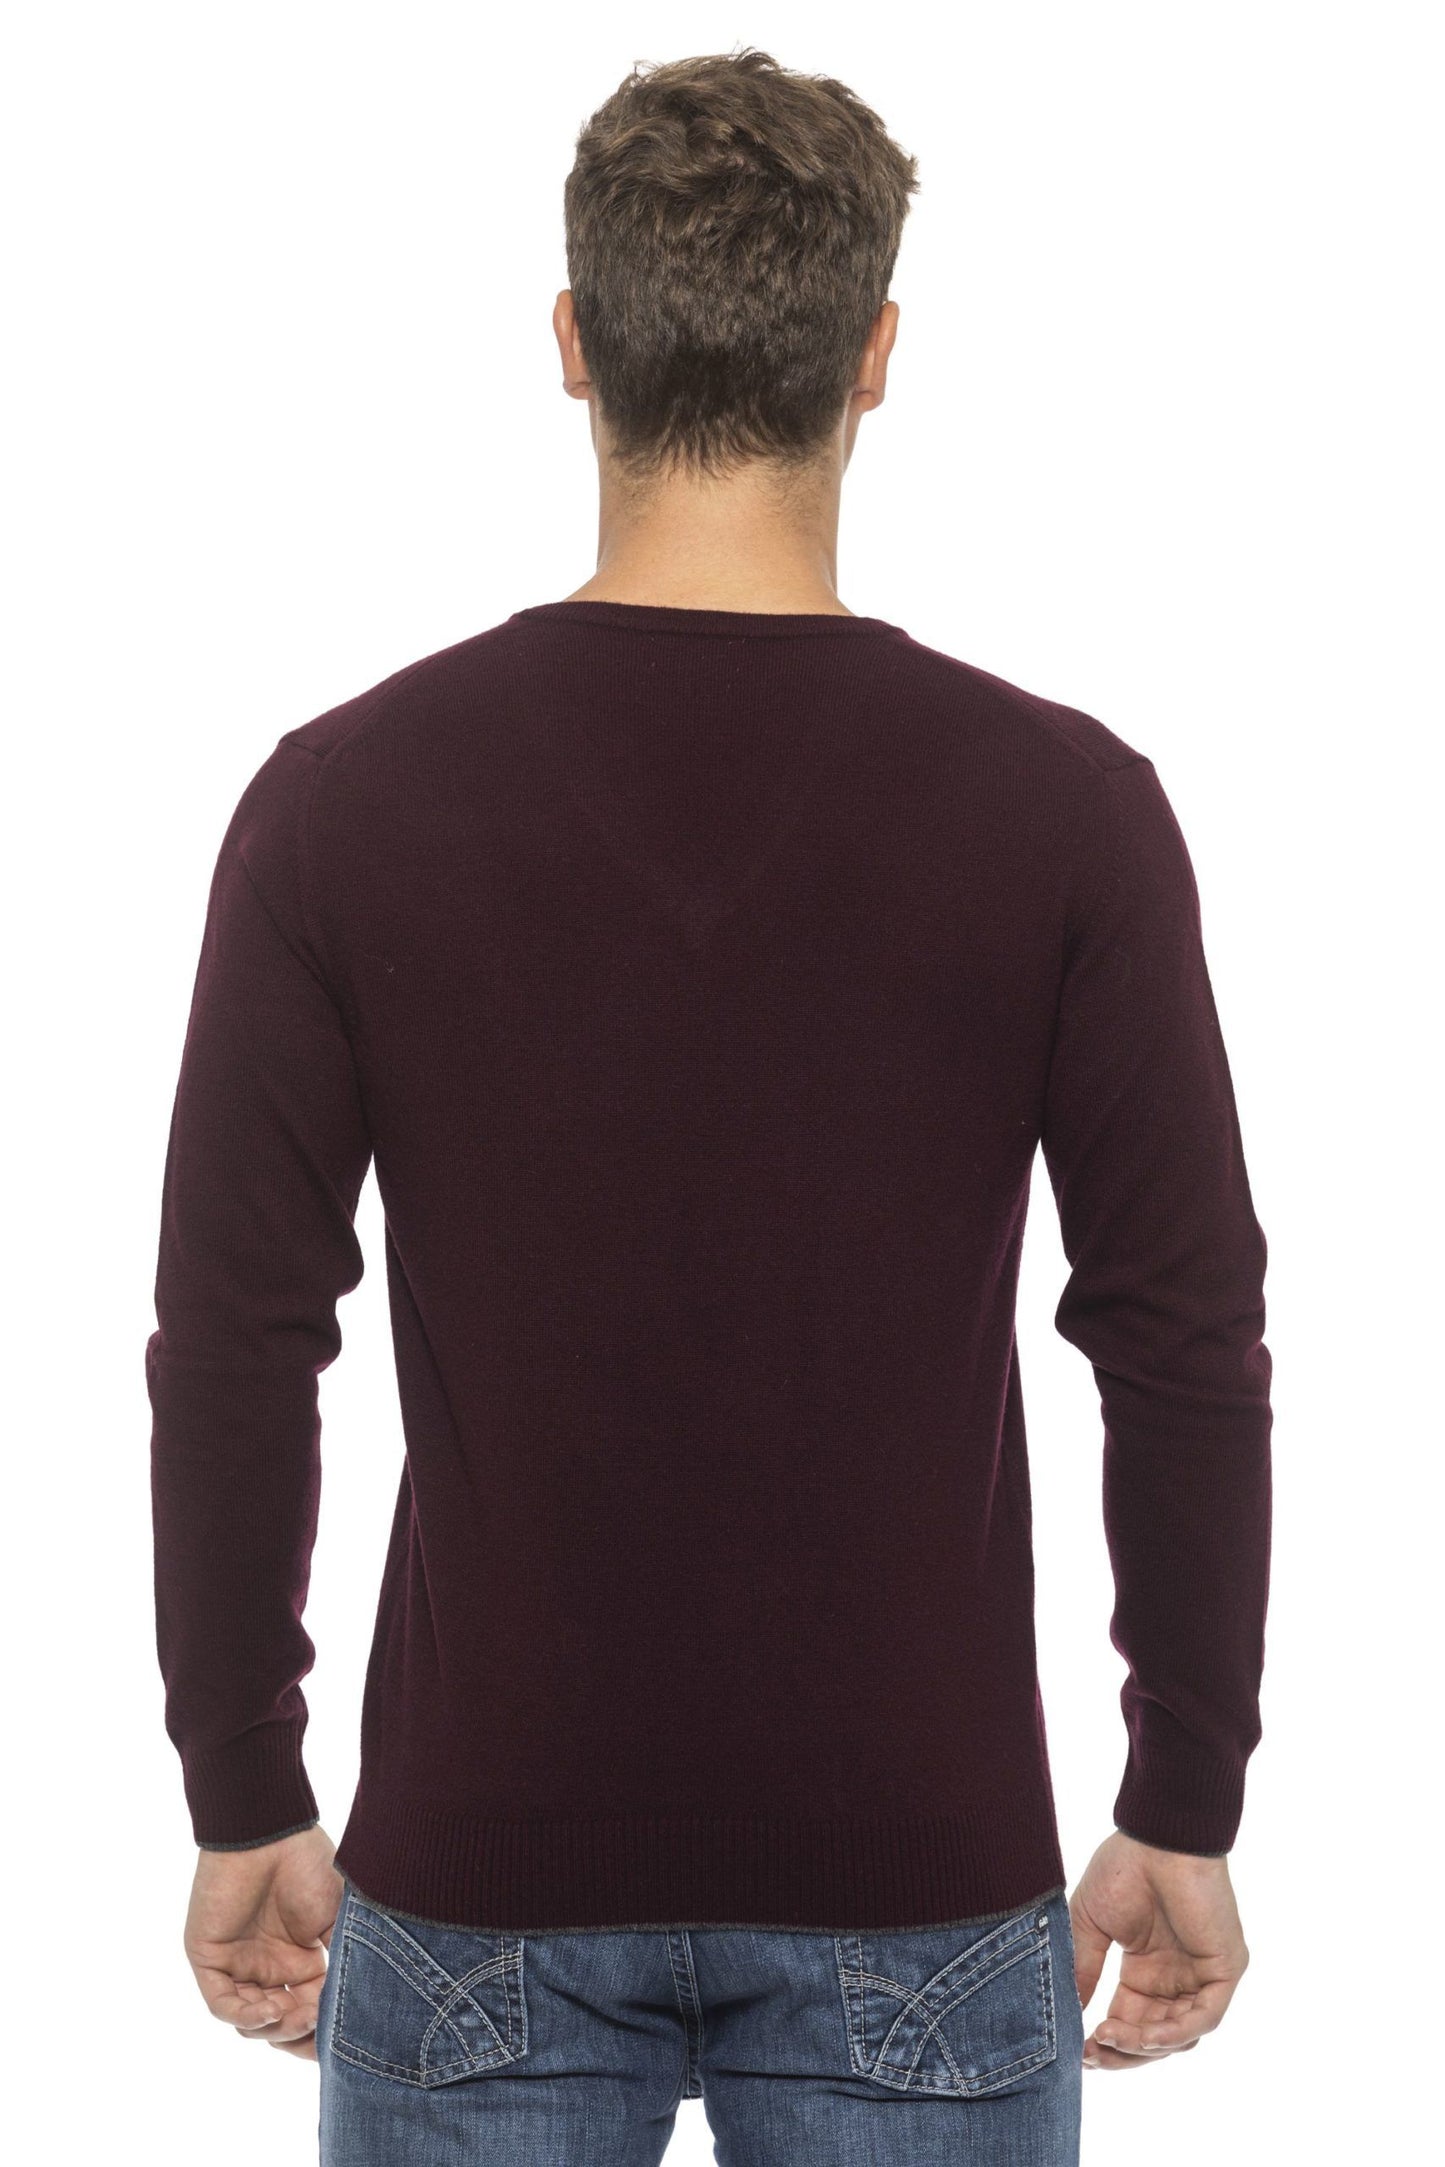 Burgundy V-Neck Luxury Sweater